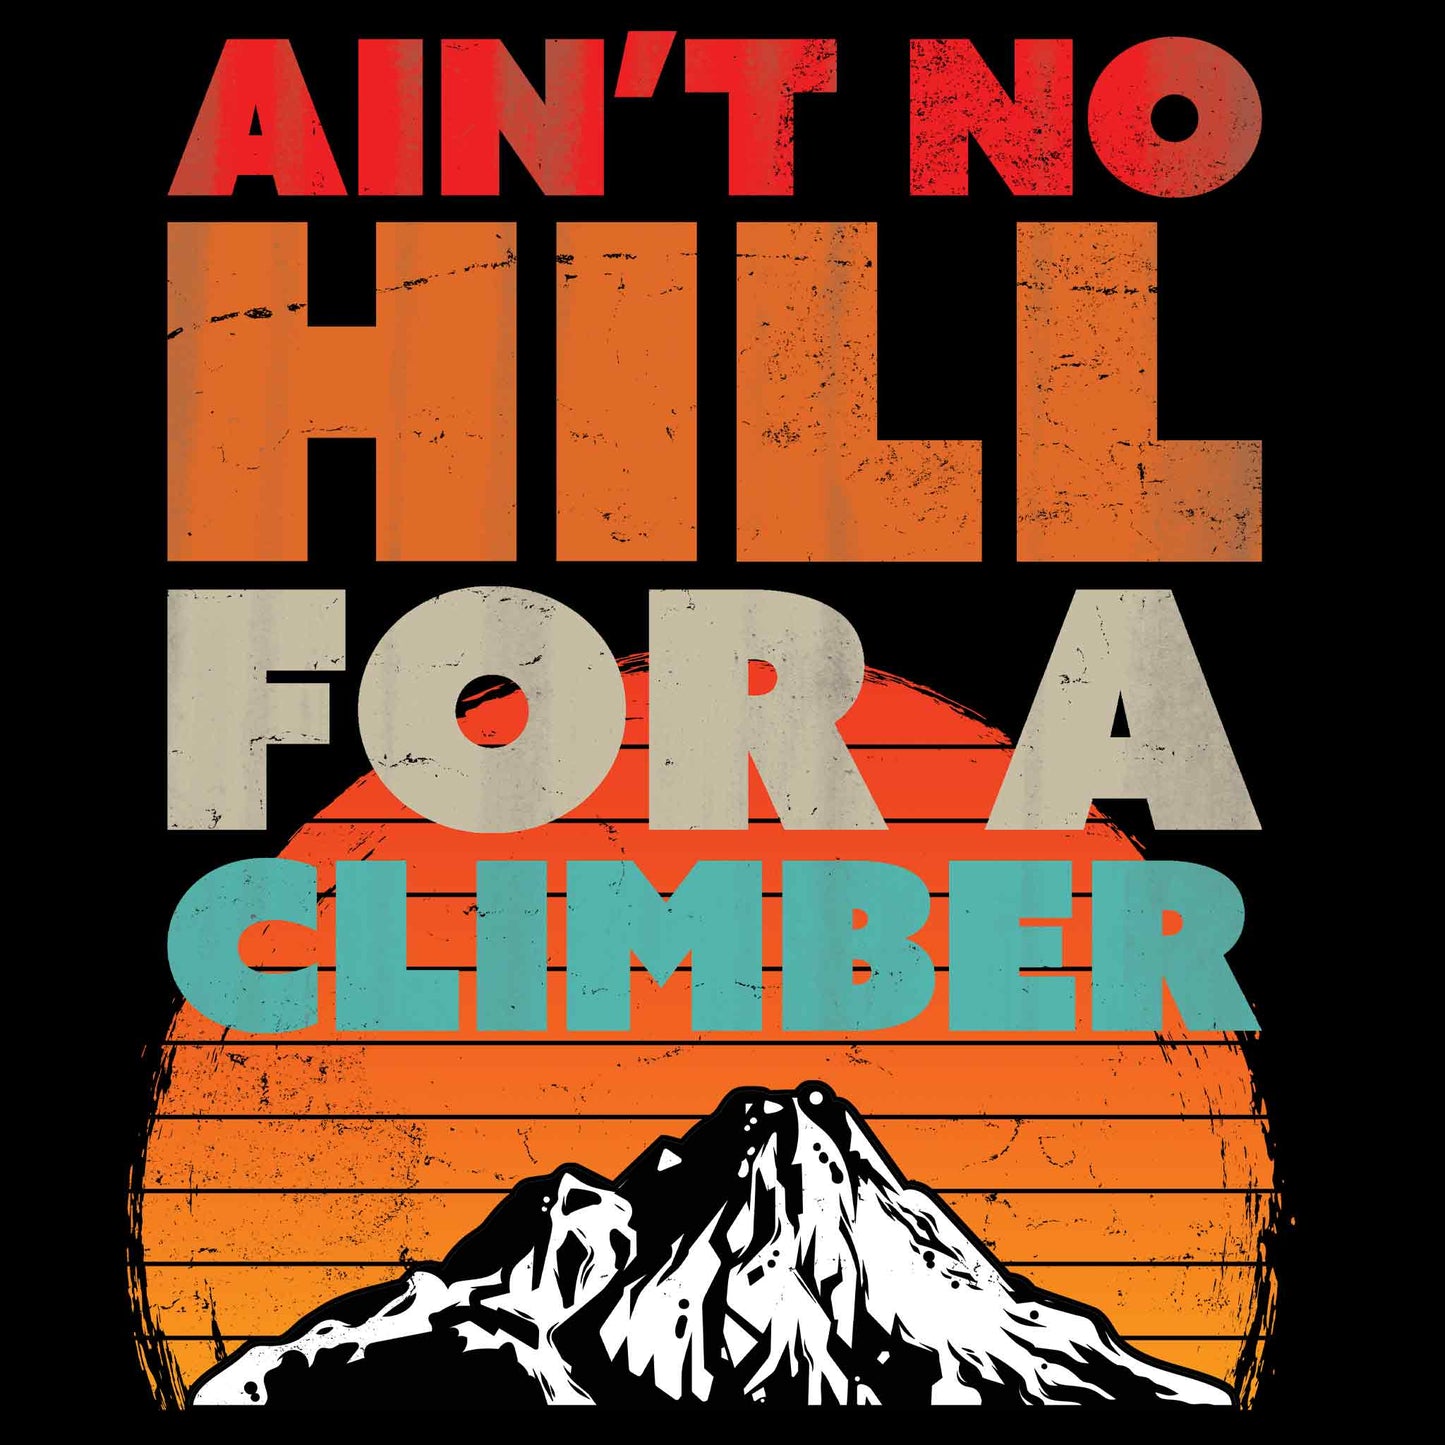 Ain't No Hill For A Climber T-Shirt